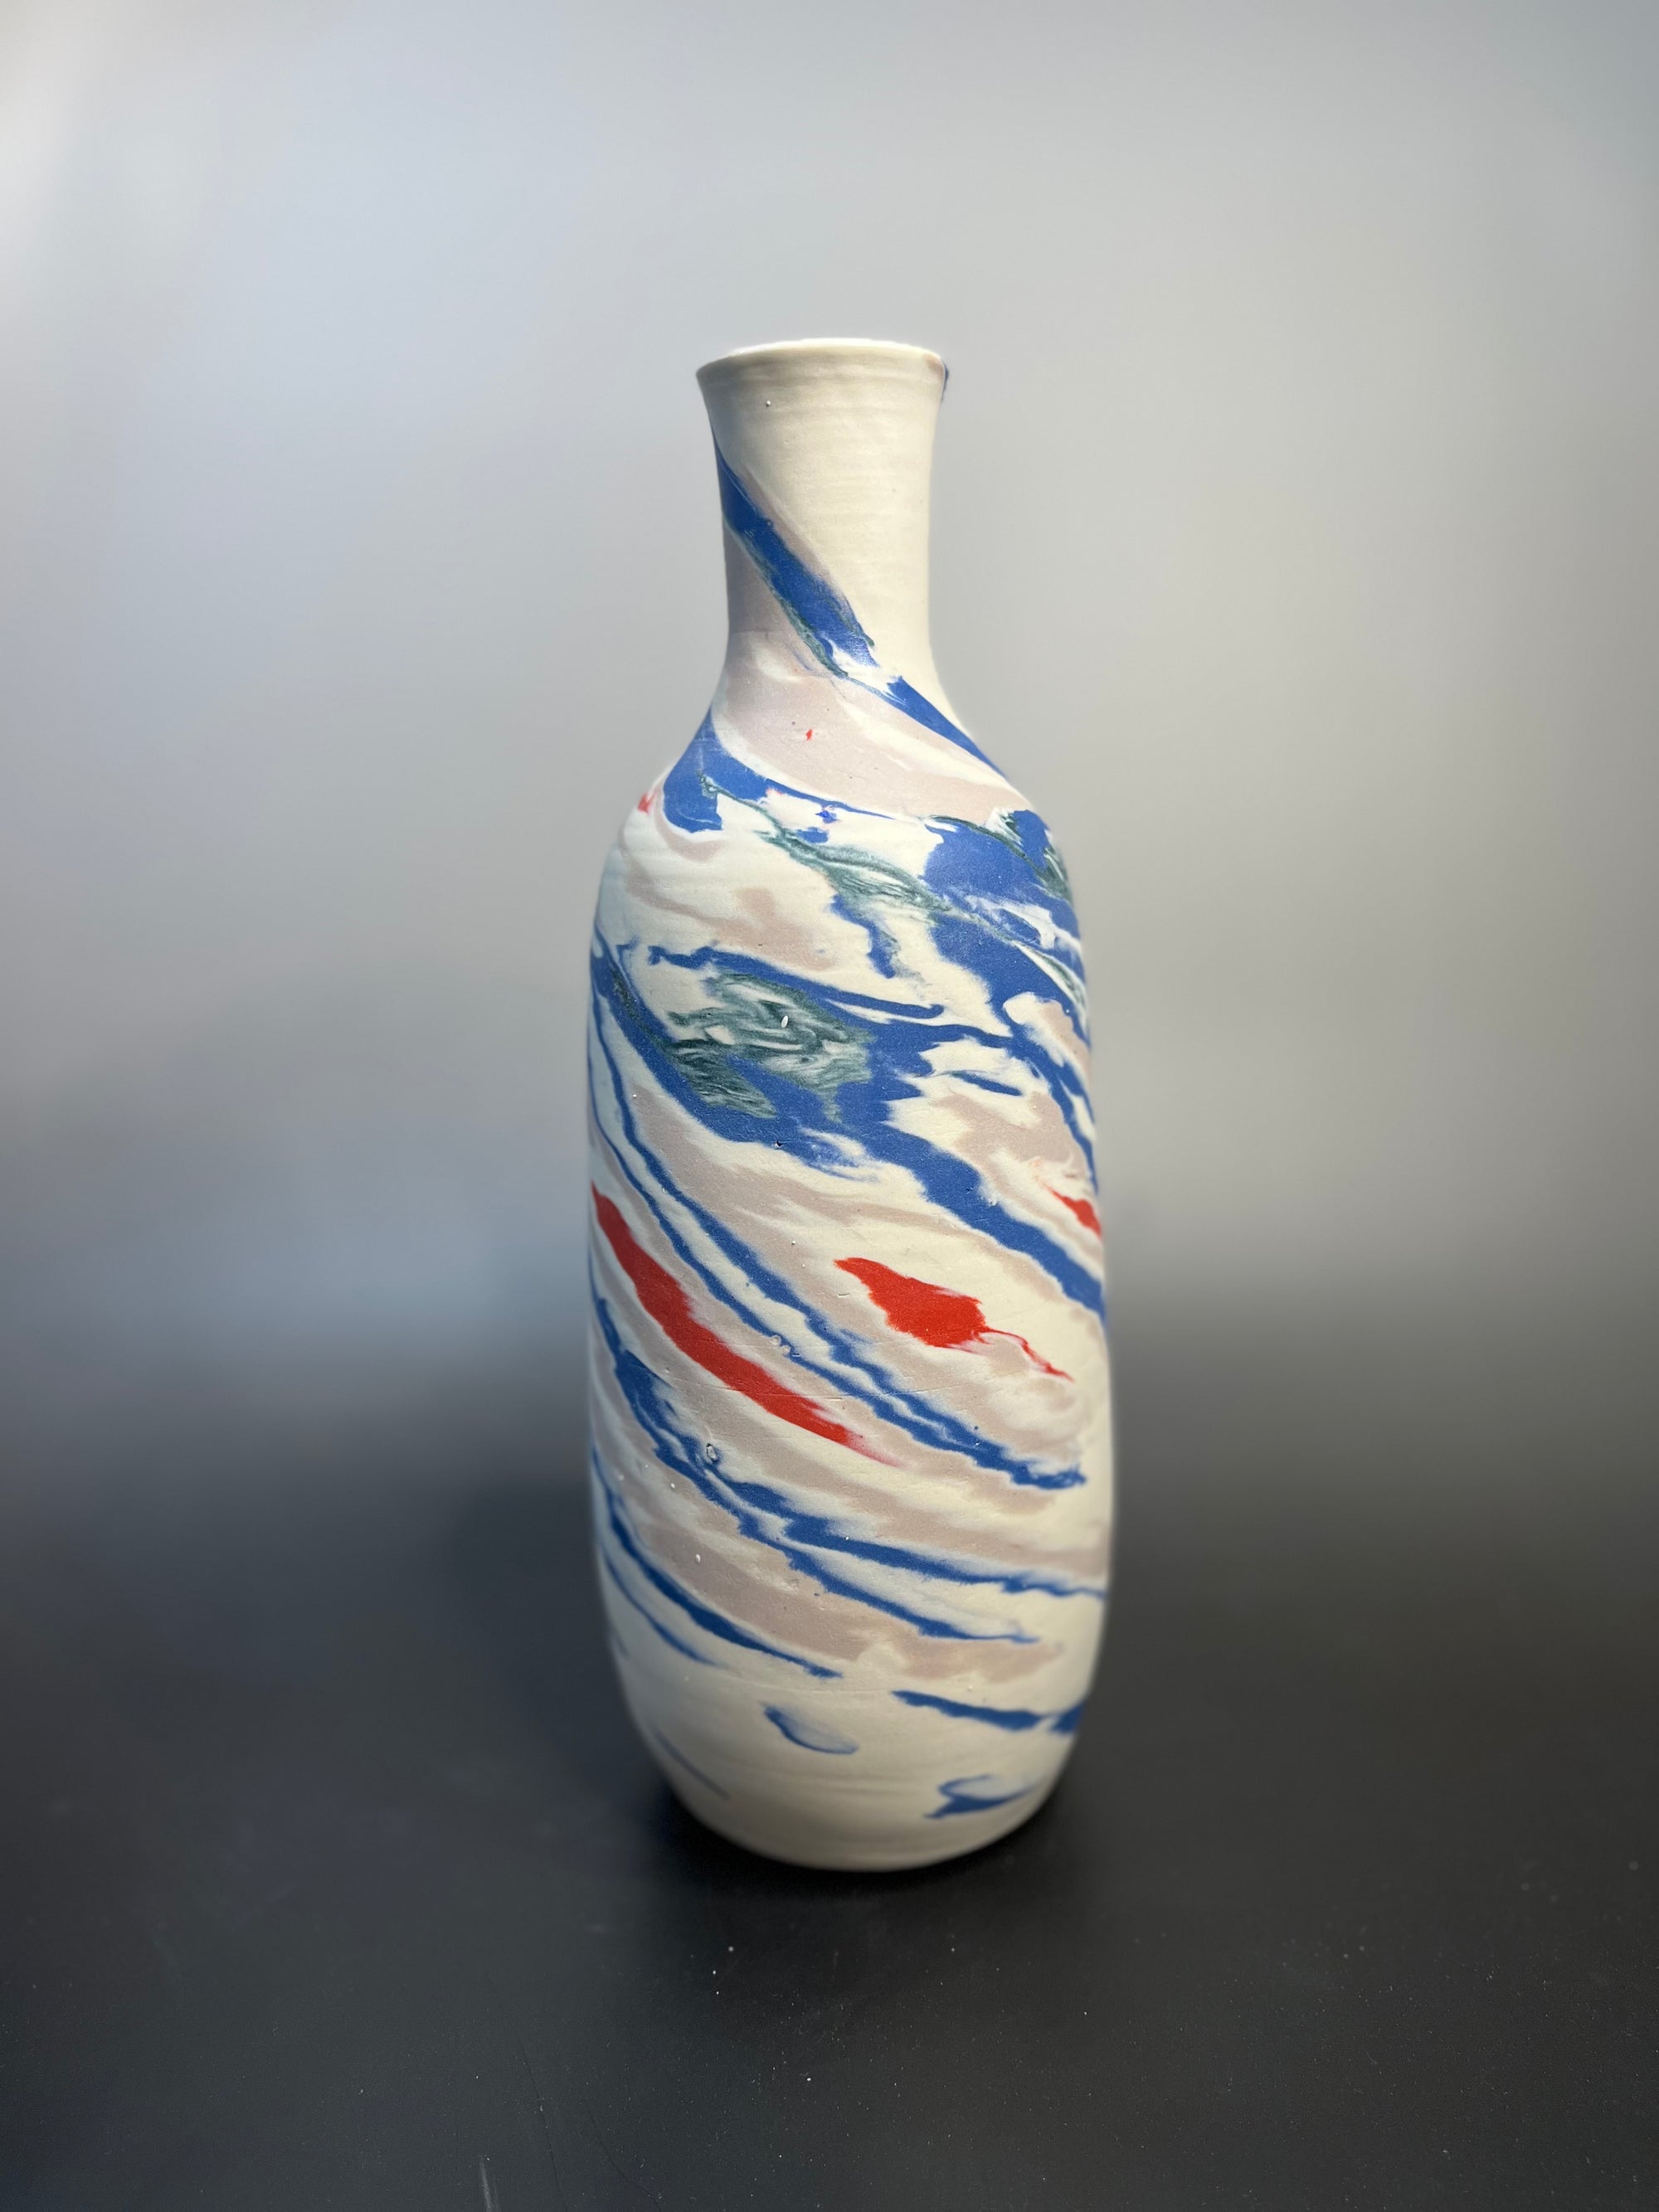 Large bottle neck vase